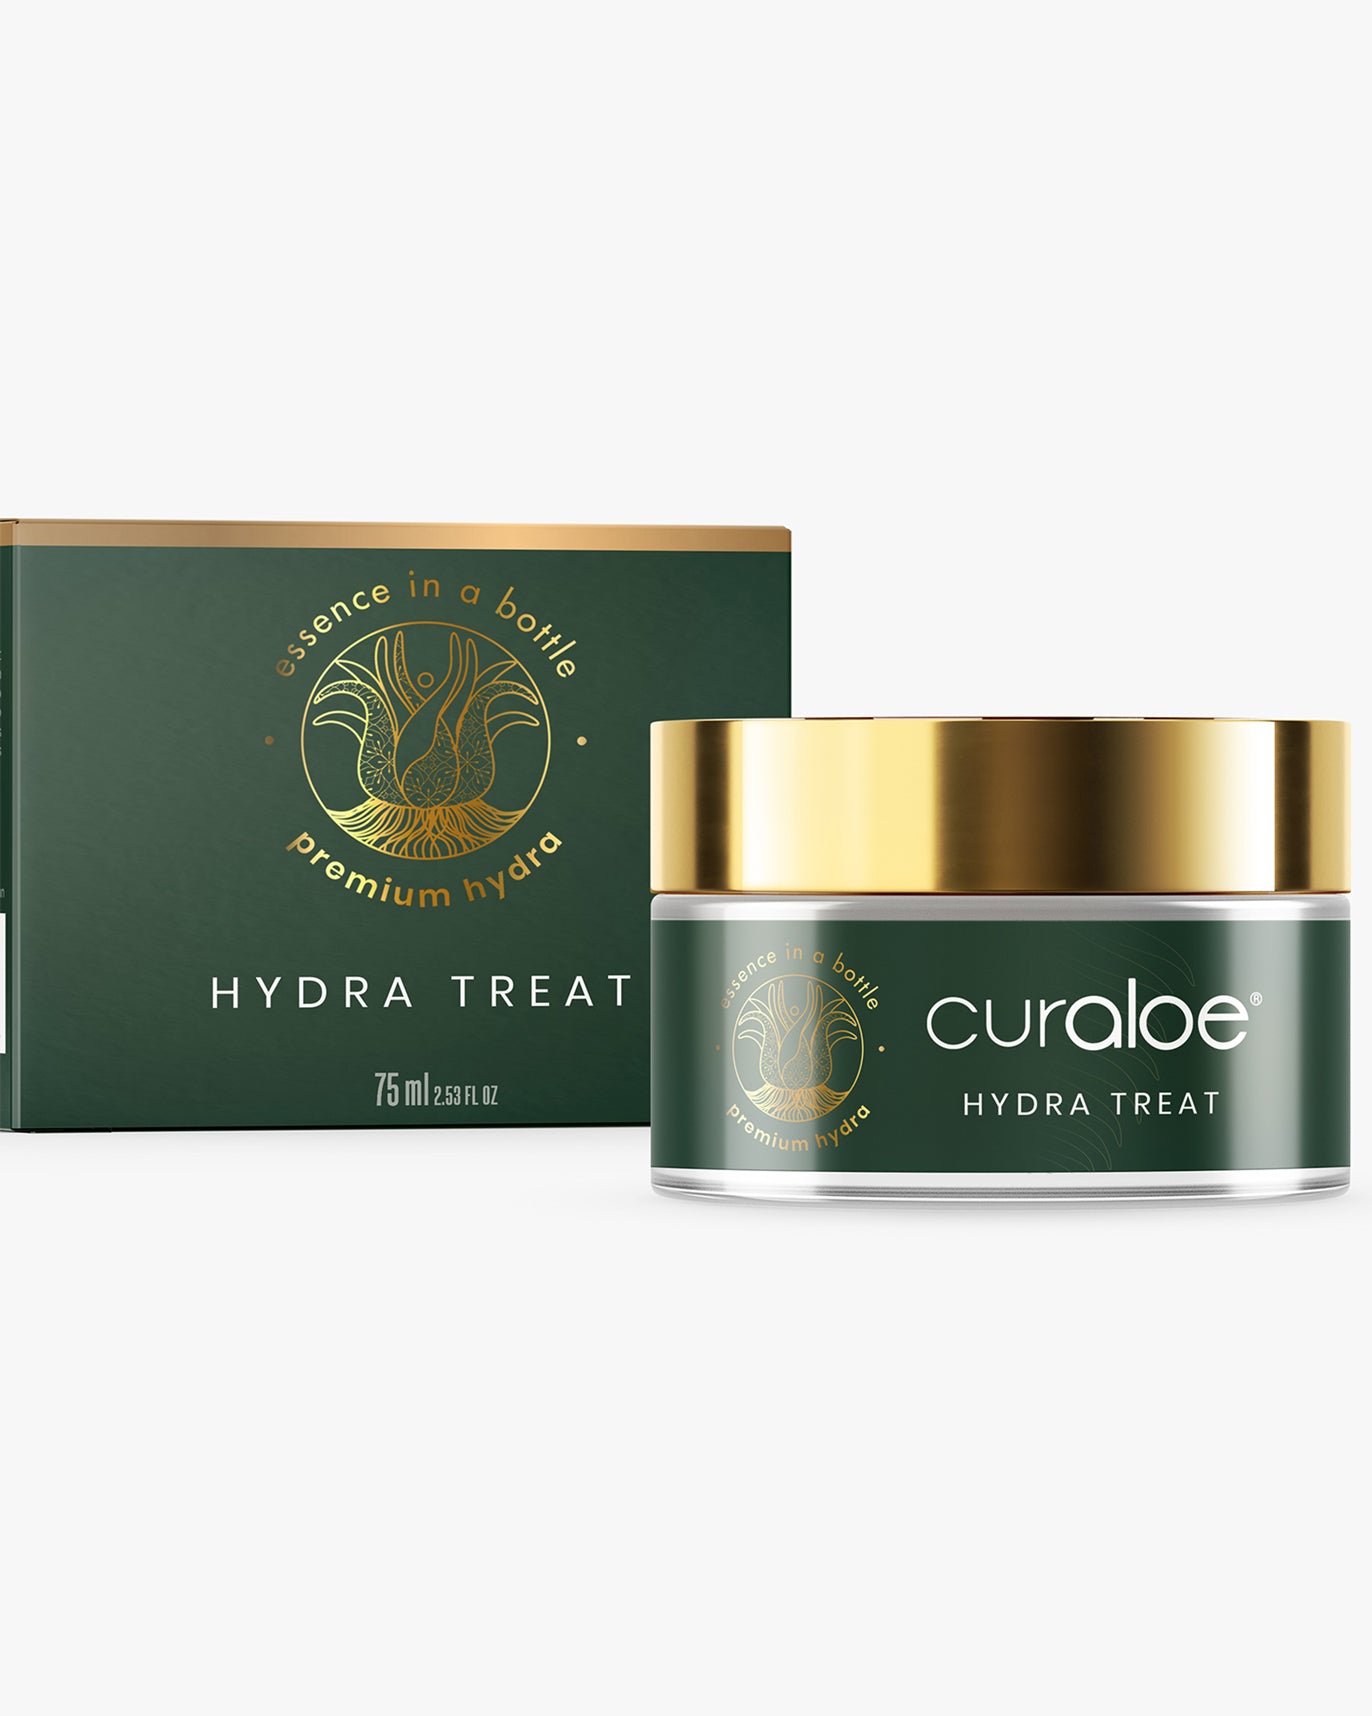 Curaloe Premium Hydra Treat